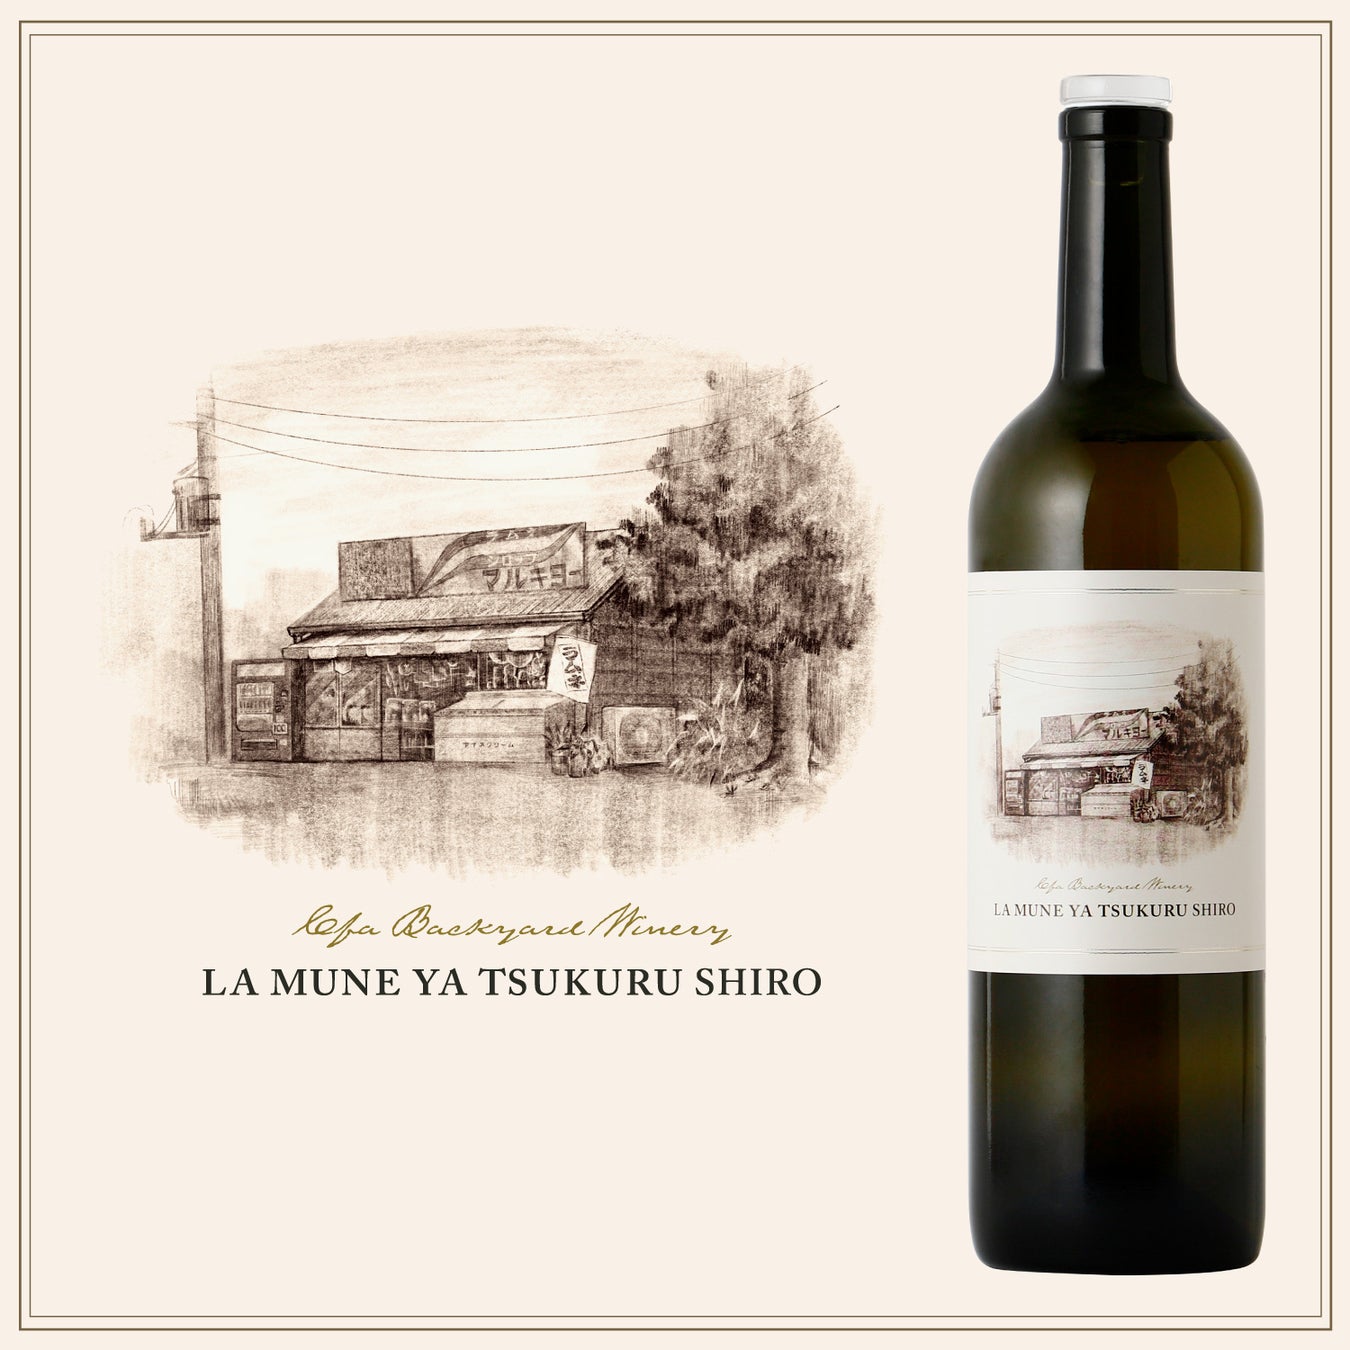 SNSで話題の”ラムネ屋生まれのワイナリーが造るワイン”から、白ワイン「La Mune Ya Tsukuru Shiro」が新登場